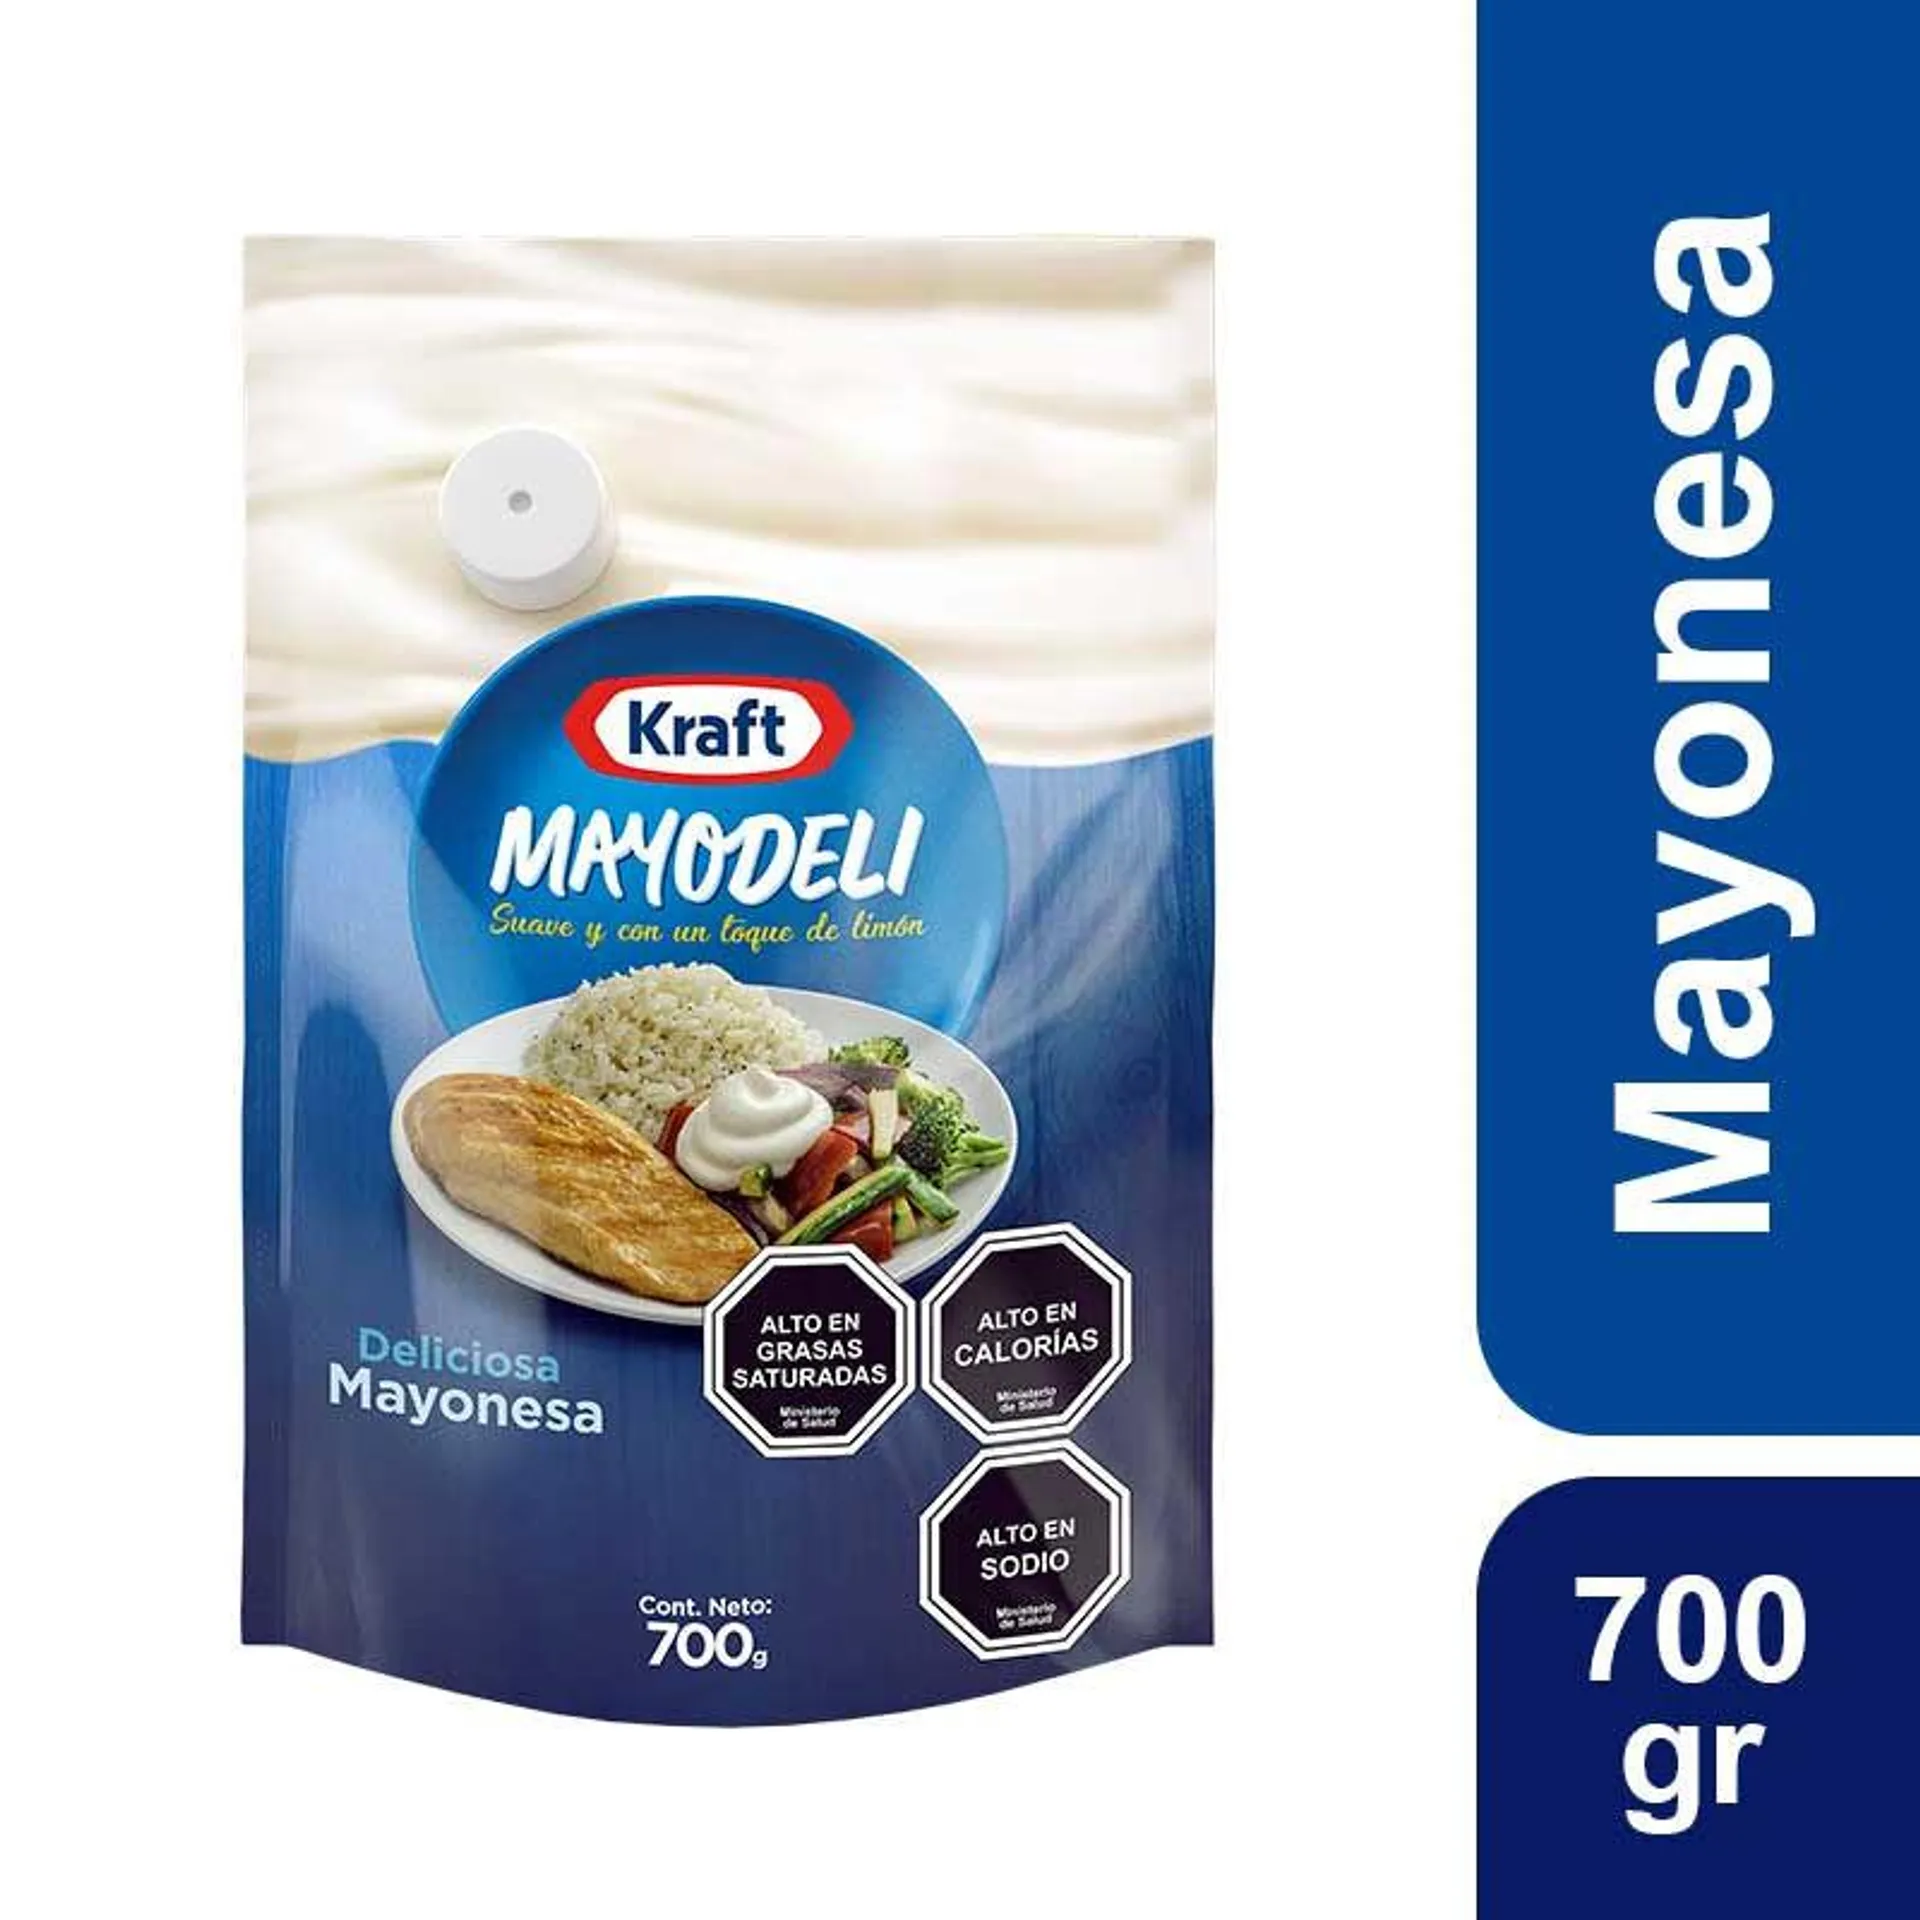 Mayonesa deli Kraft DP 700g, 700 g